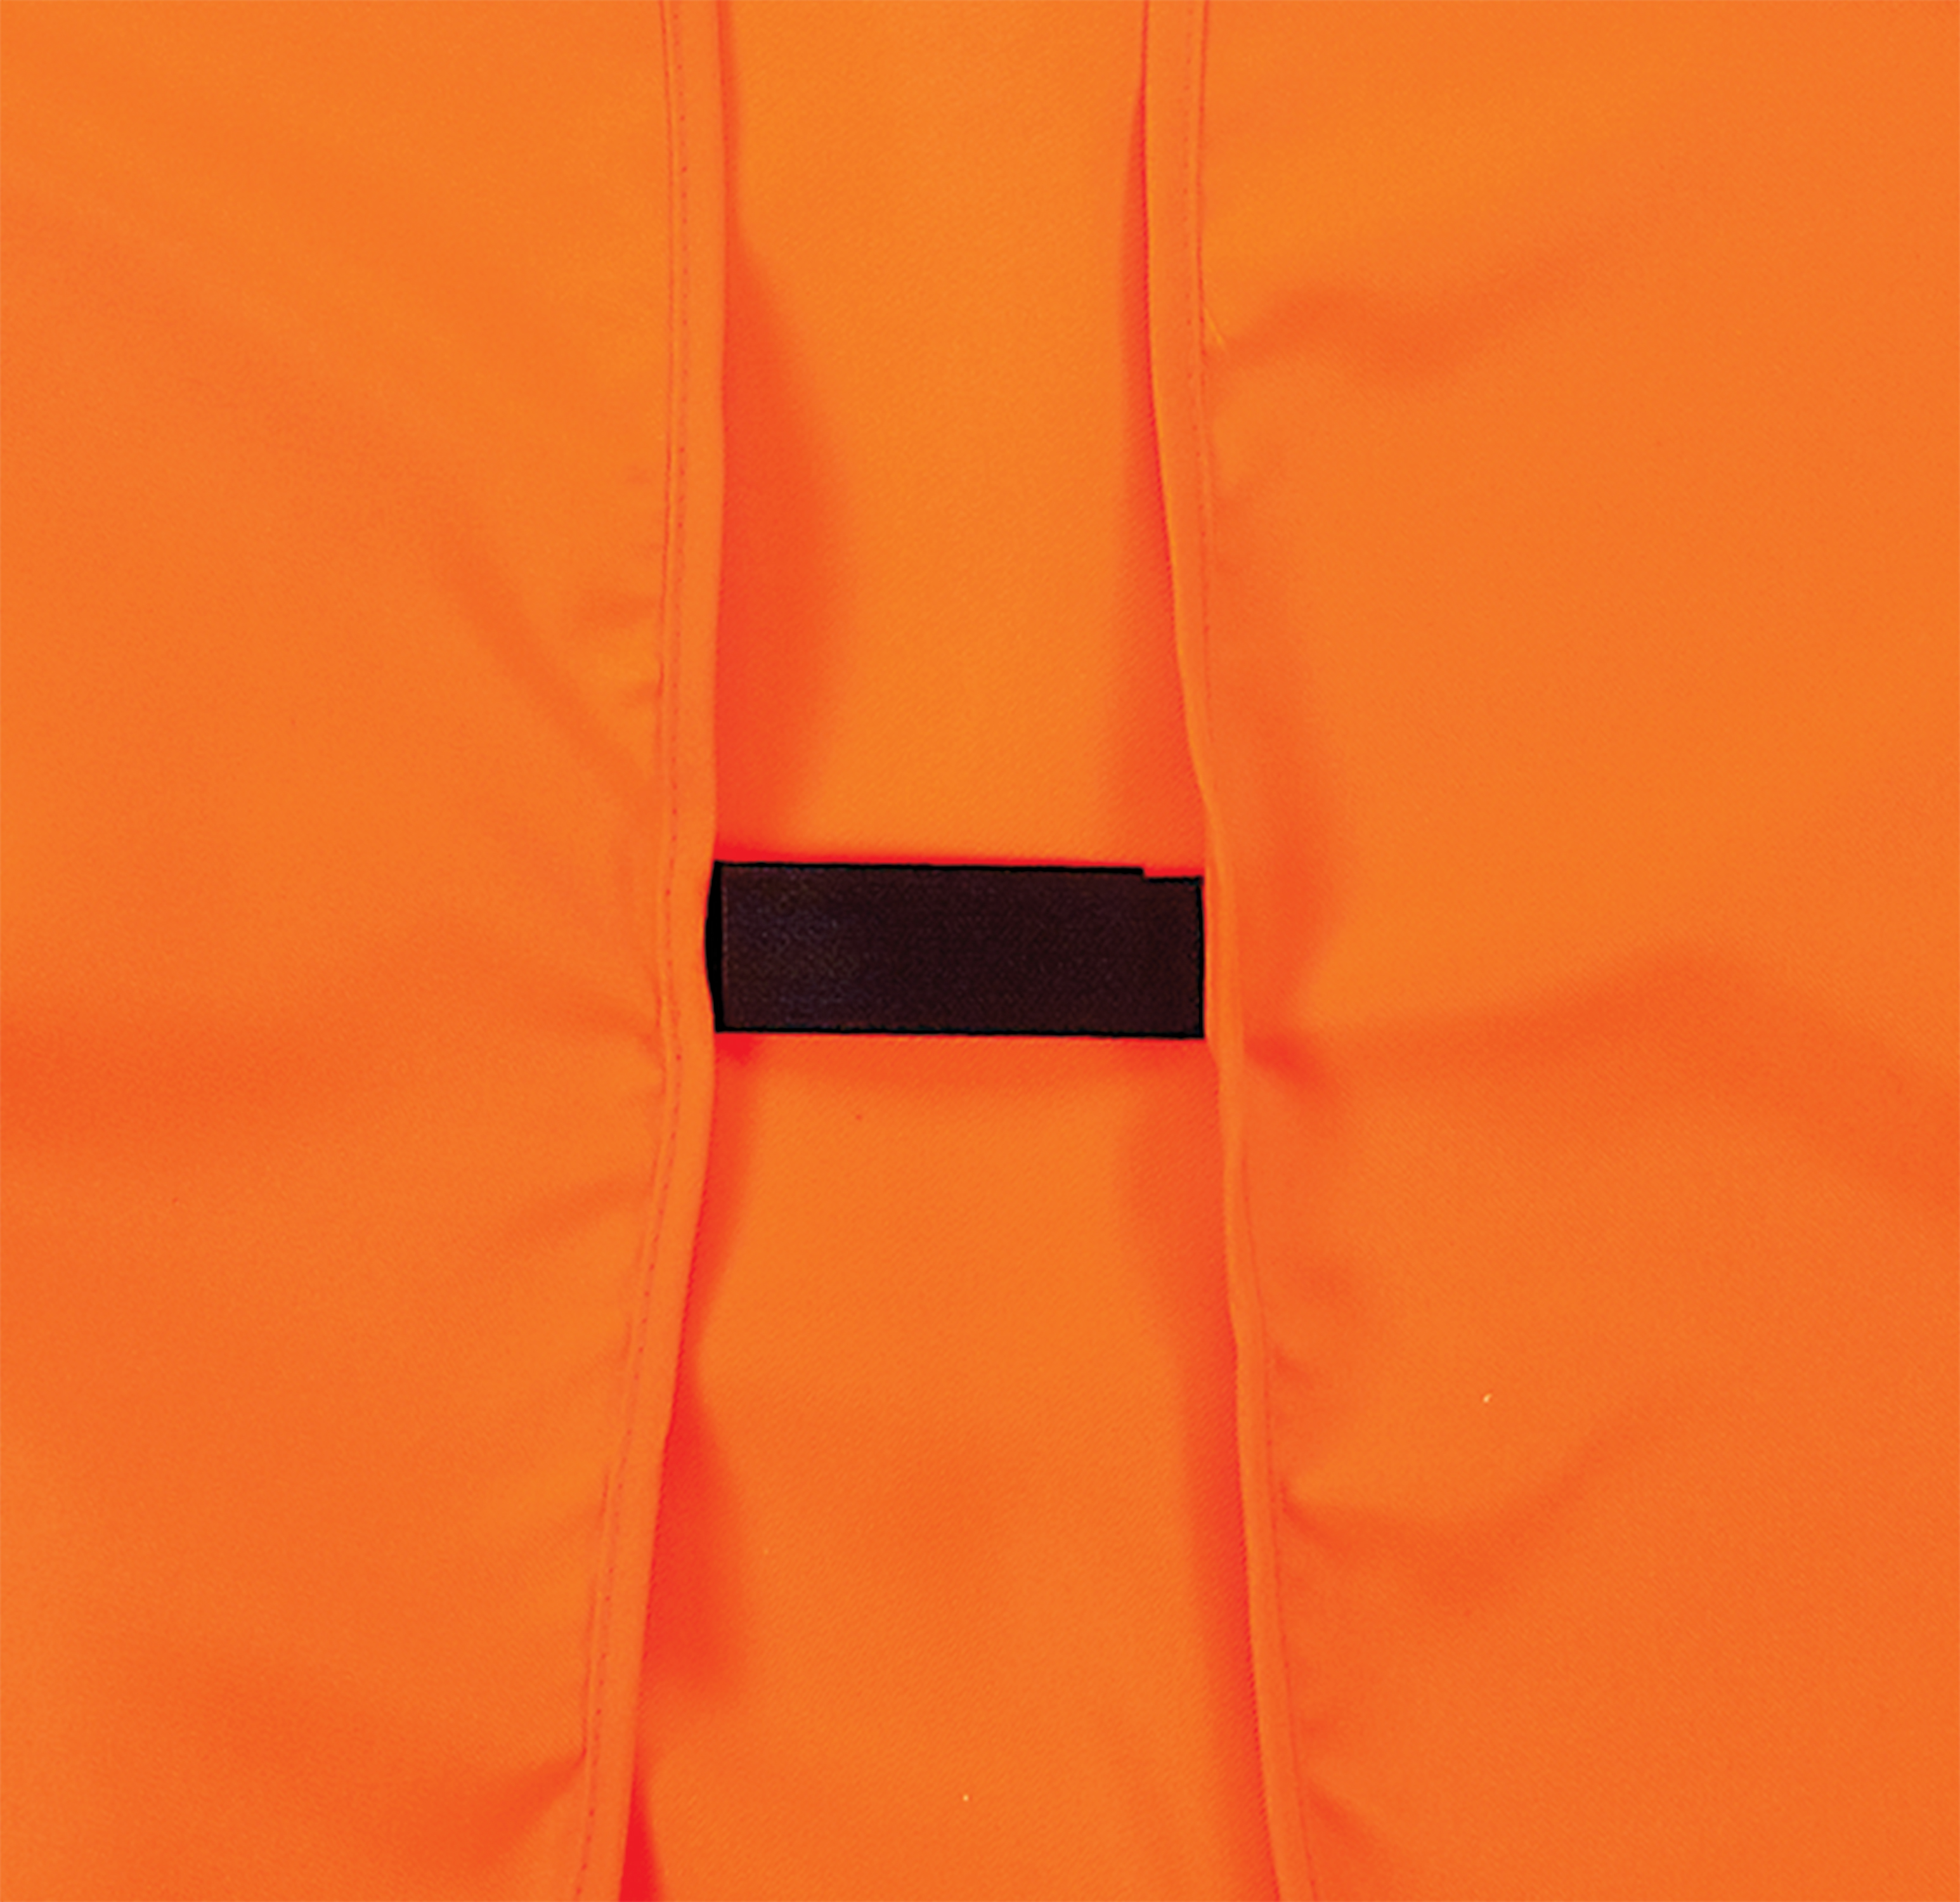 Allen Company Youth Hunting Vest, Blaze Orange, Polyester - image 3 of 4